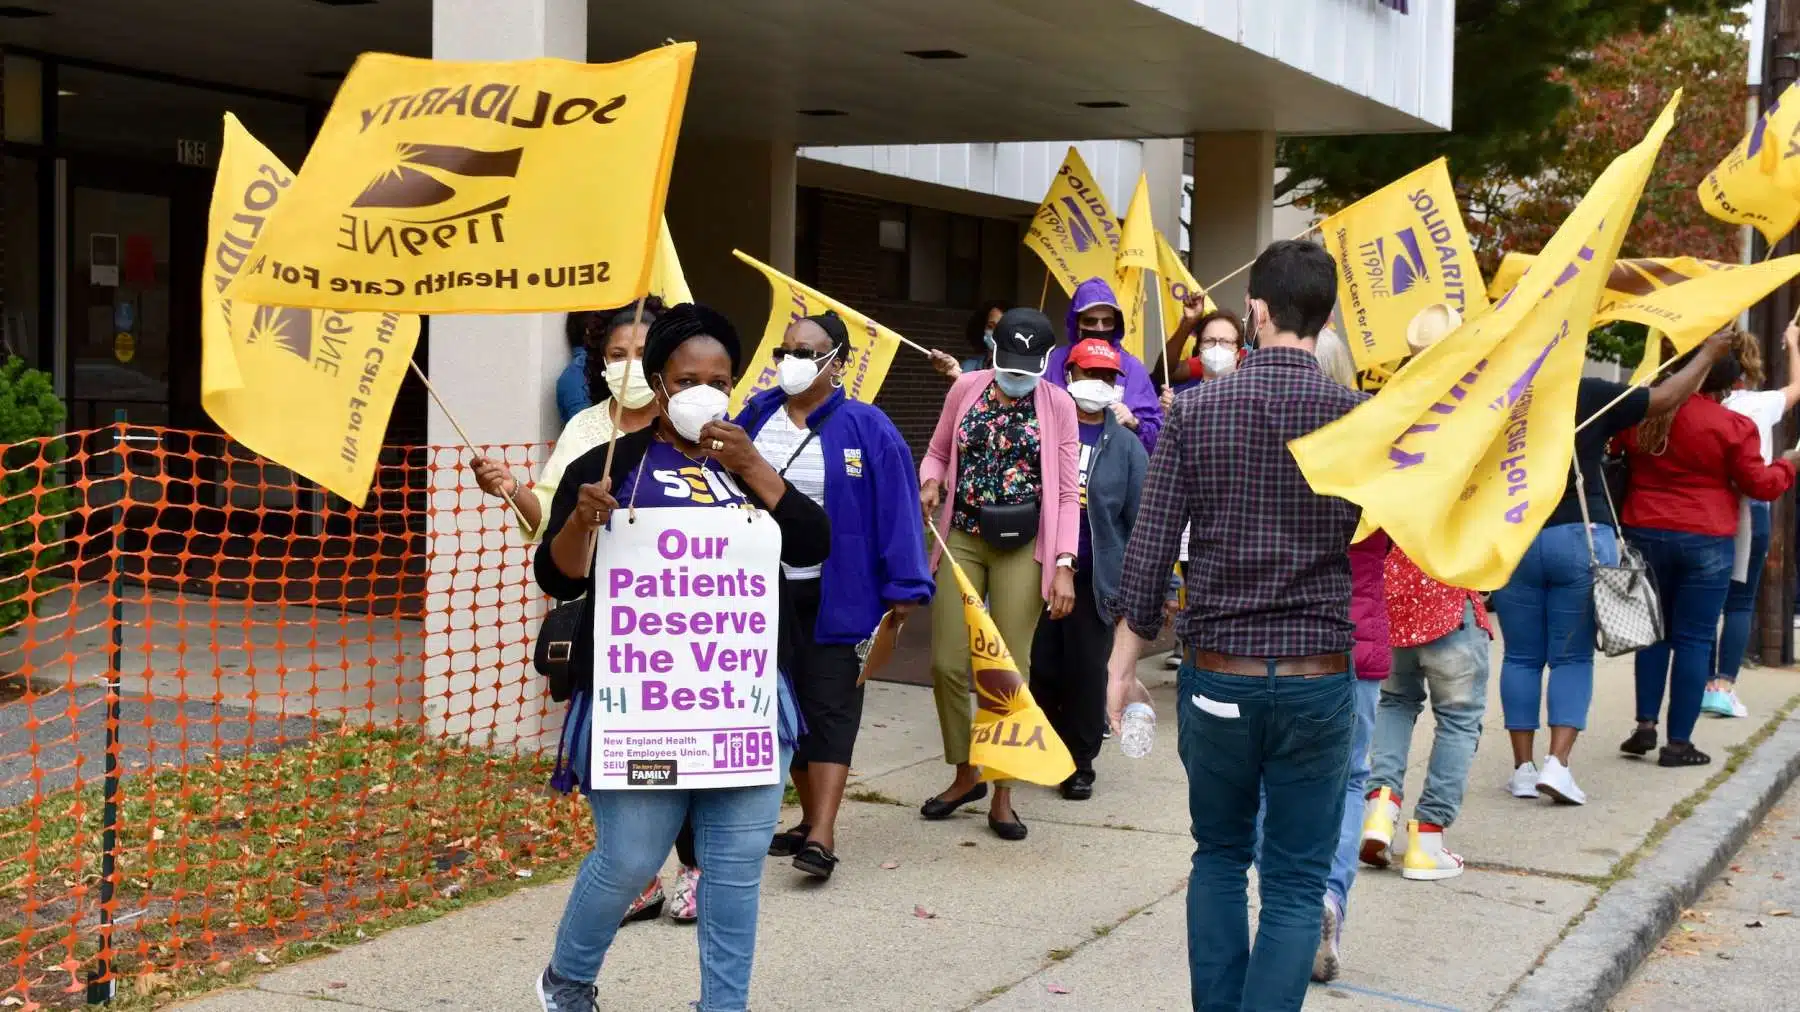 Rhode Island News: Bannister Nursing Home caregivers begin 3-day strike to demand safe staffing and better wages